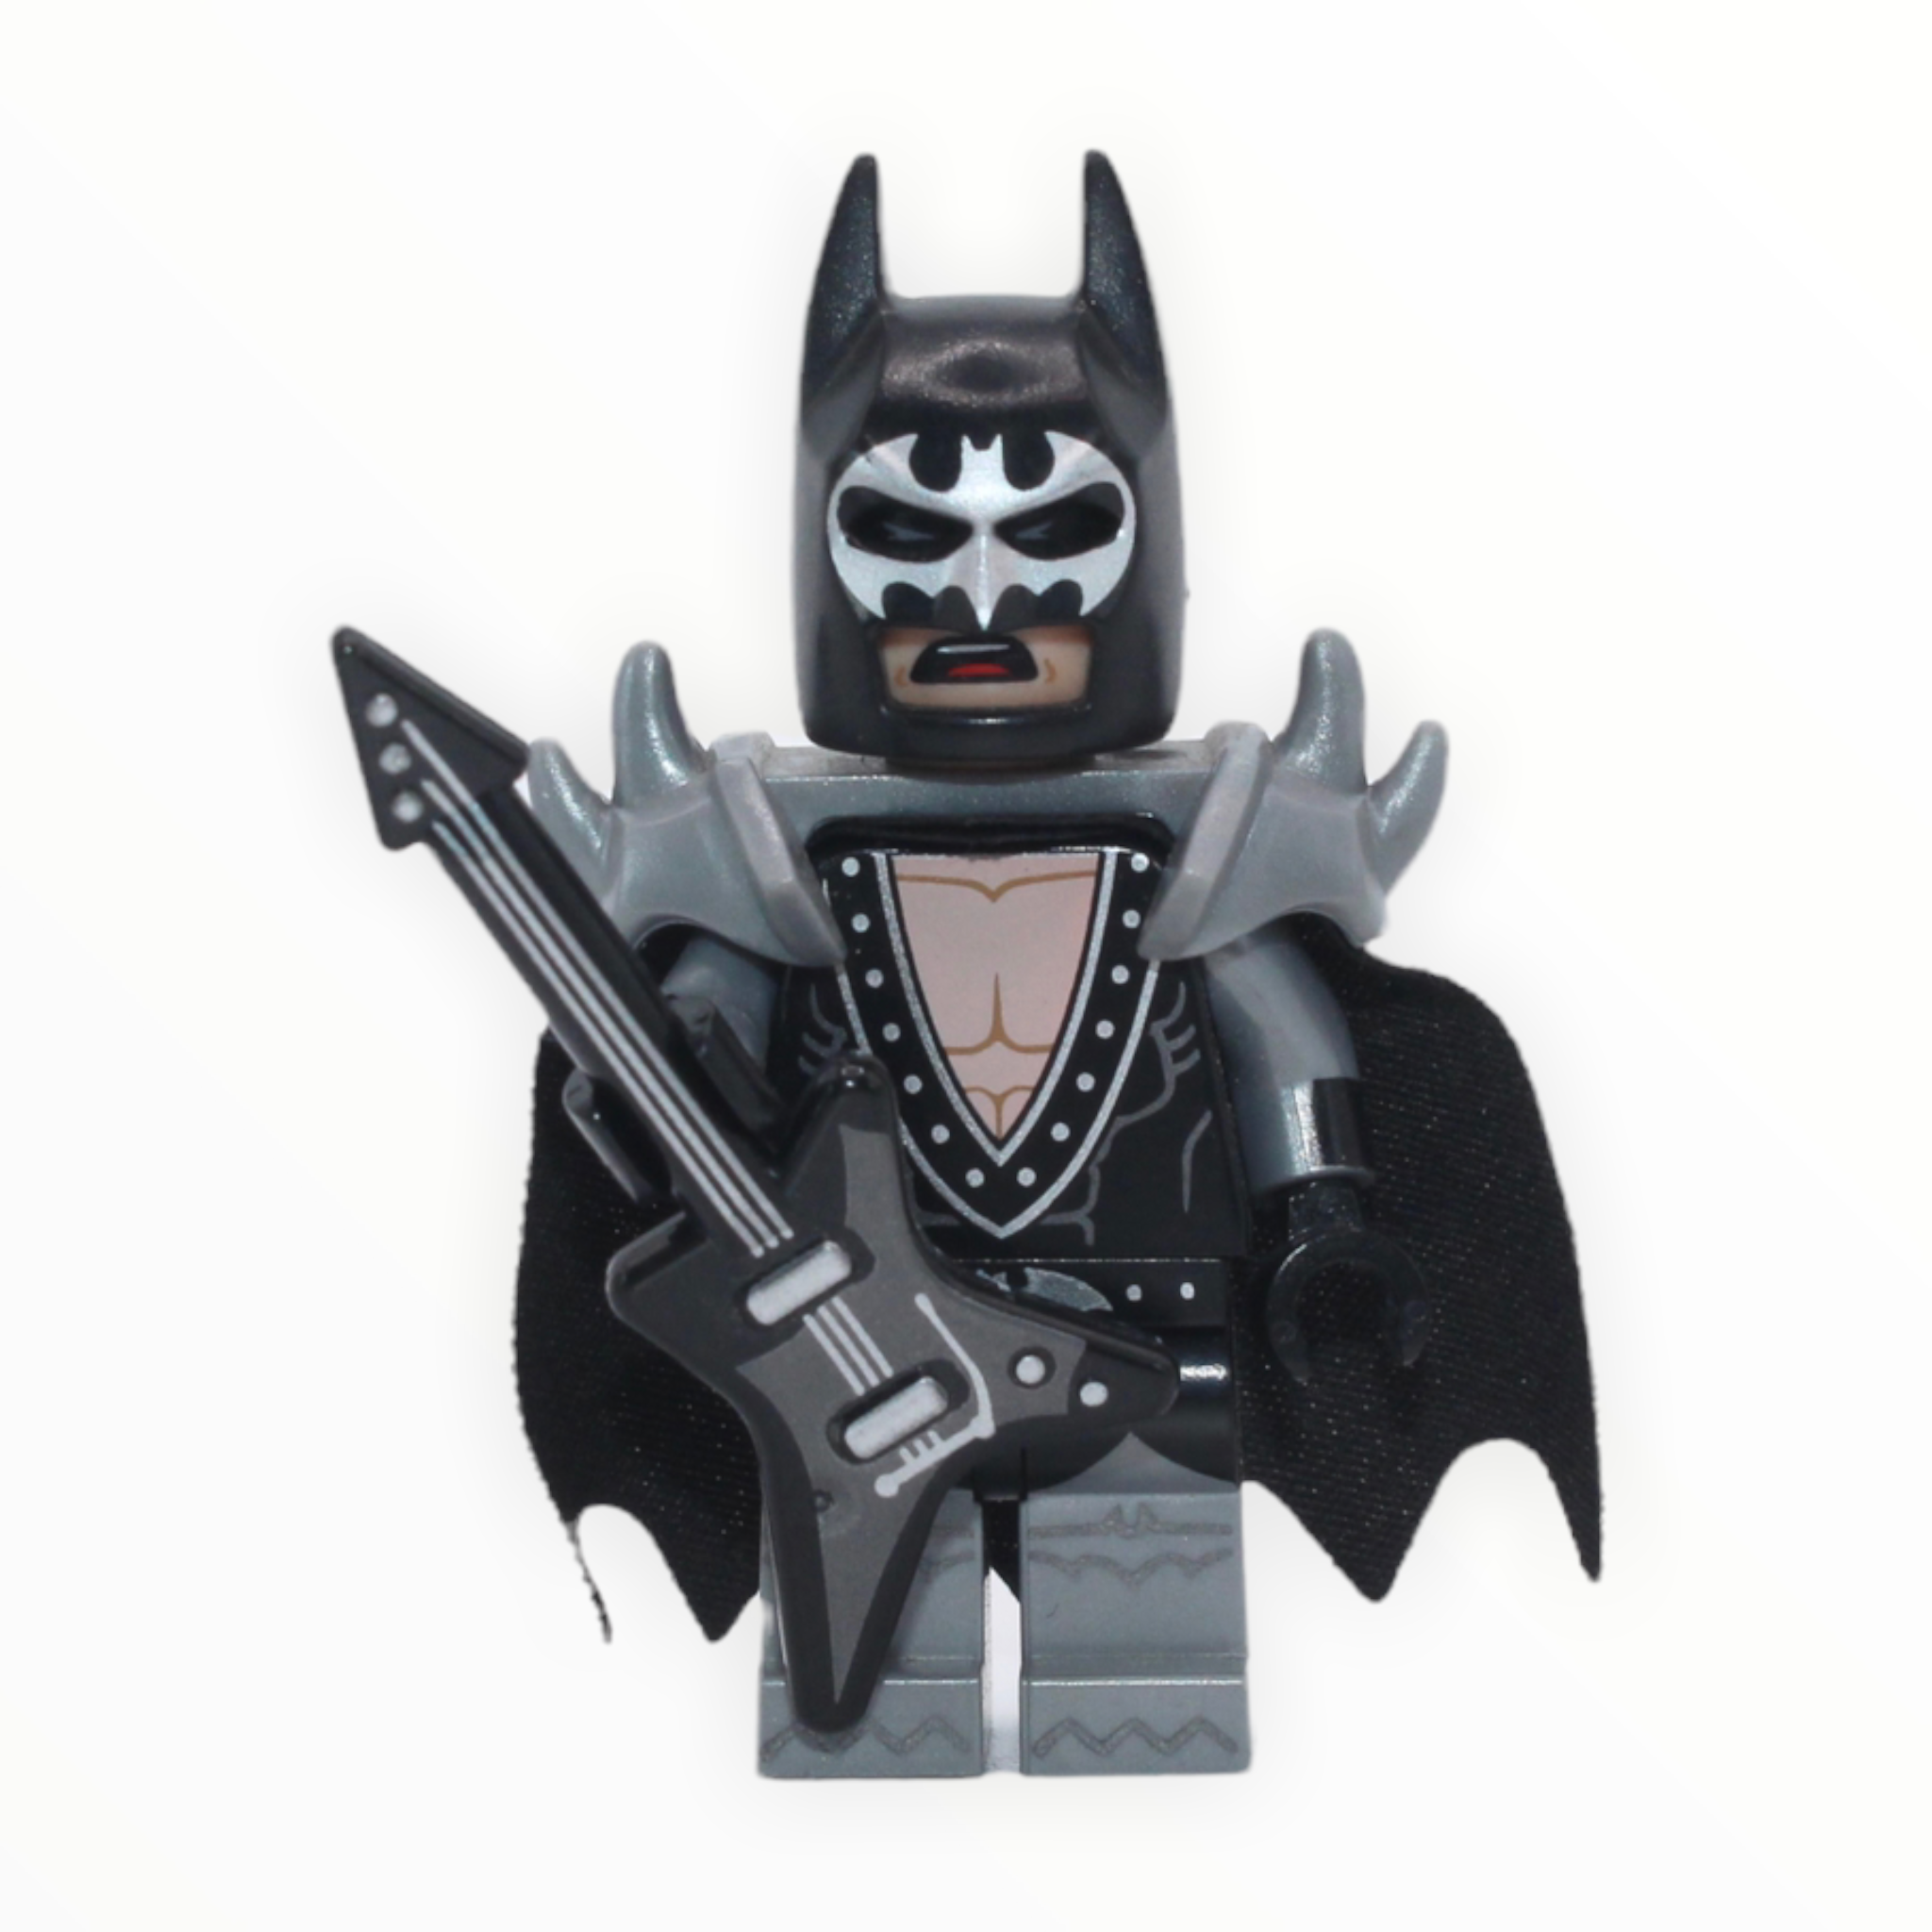 The LEGO Batman Movie Series 1: Glam Metal Batman